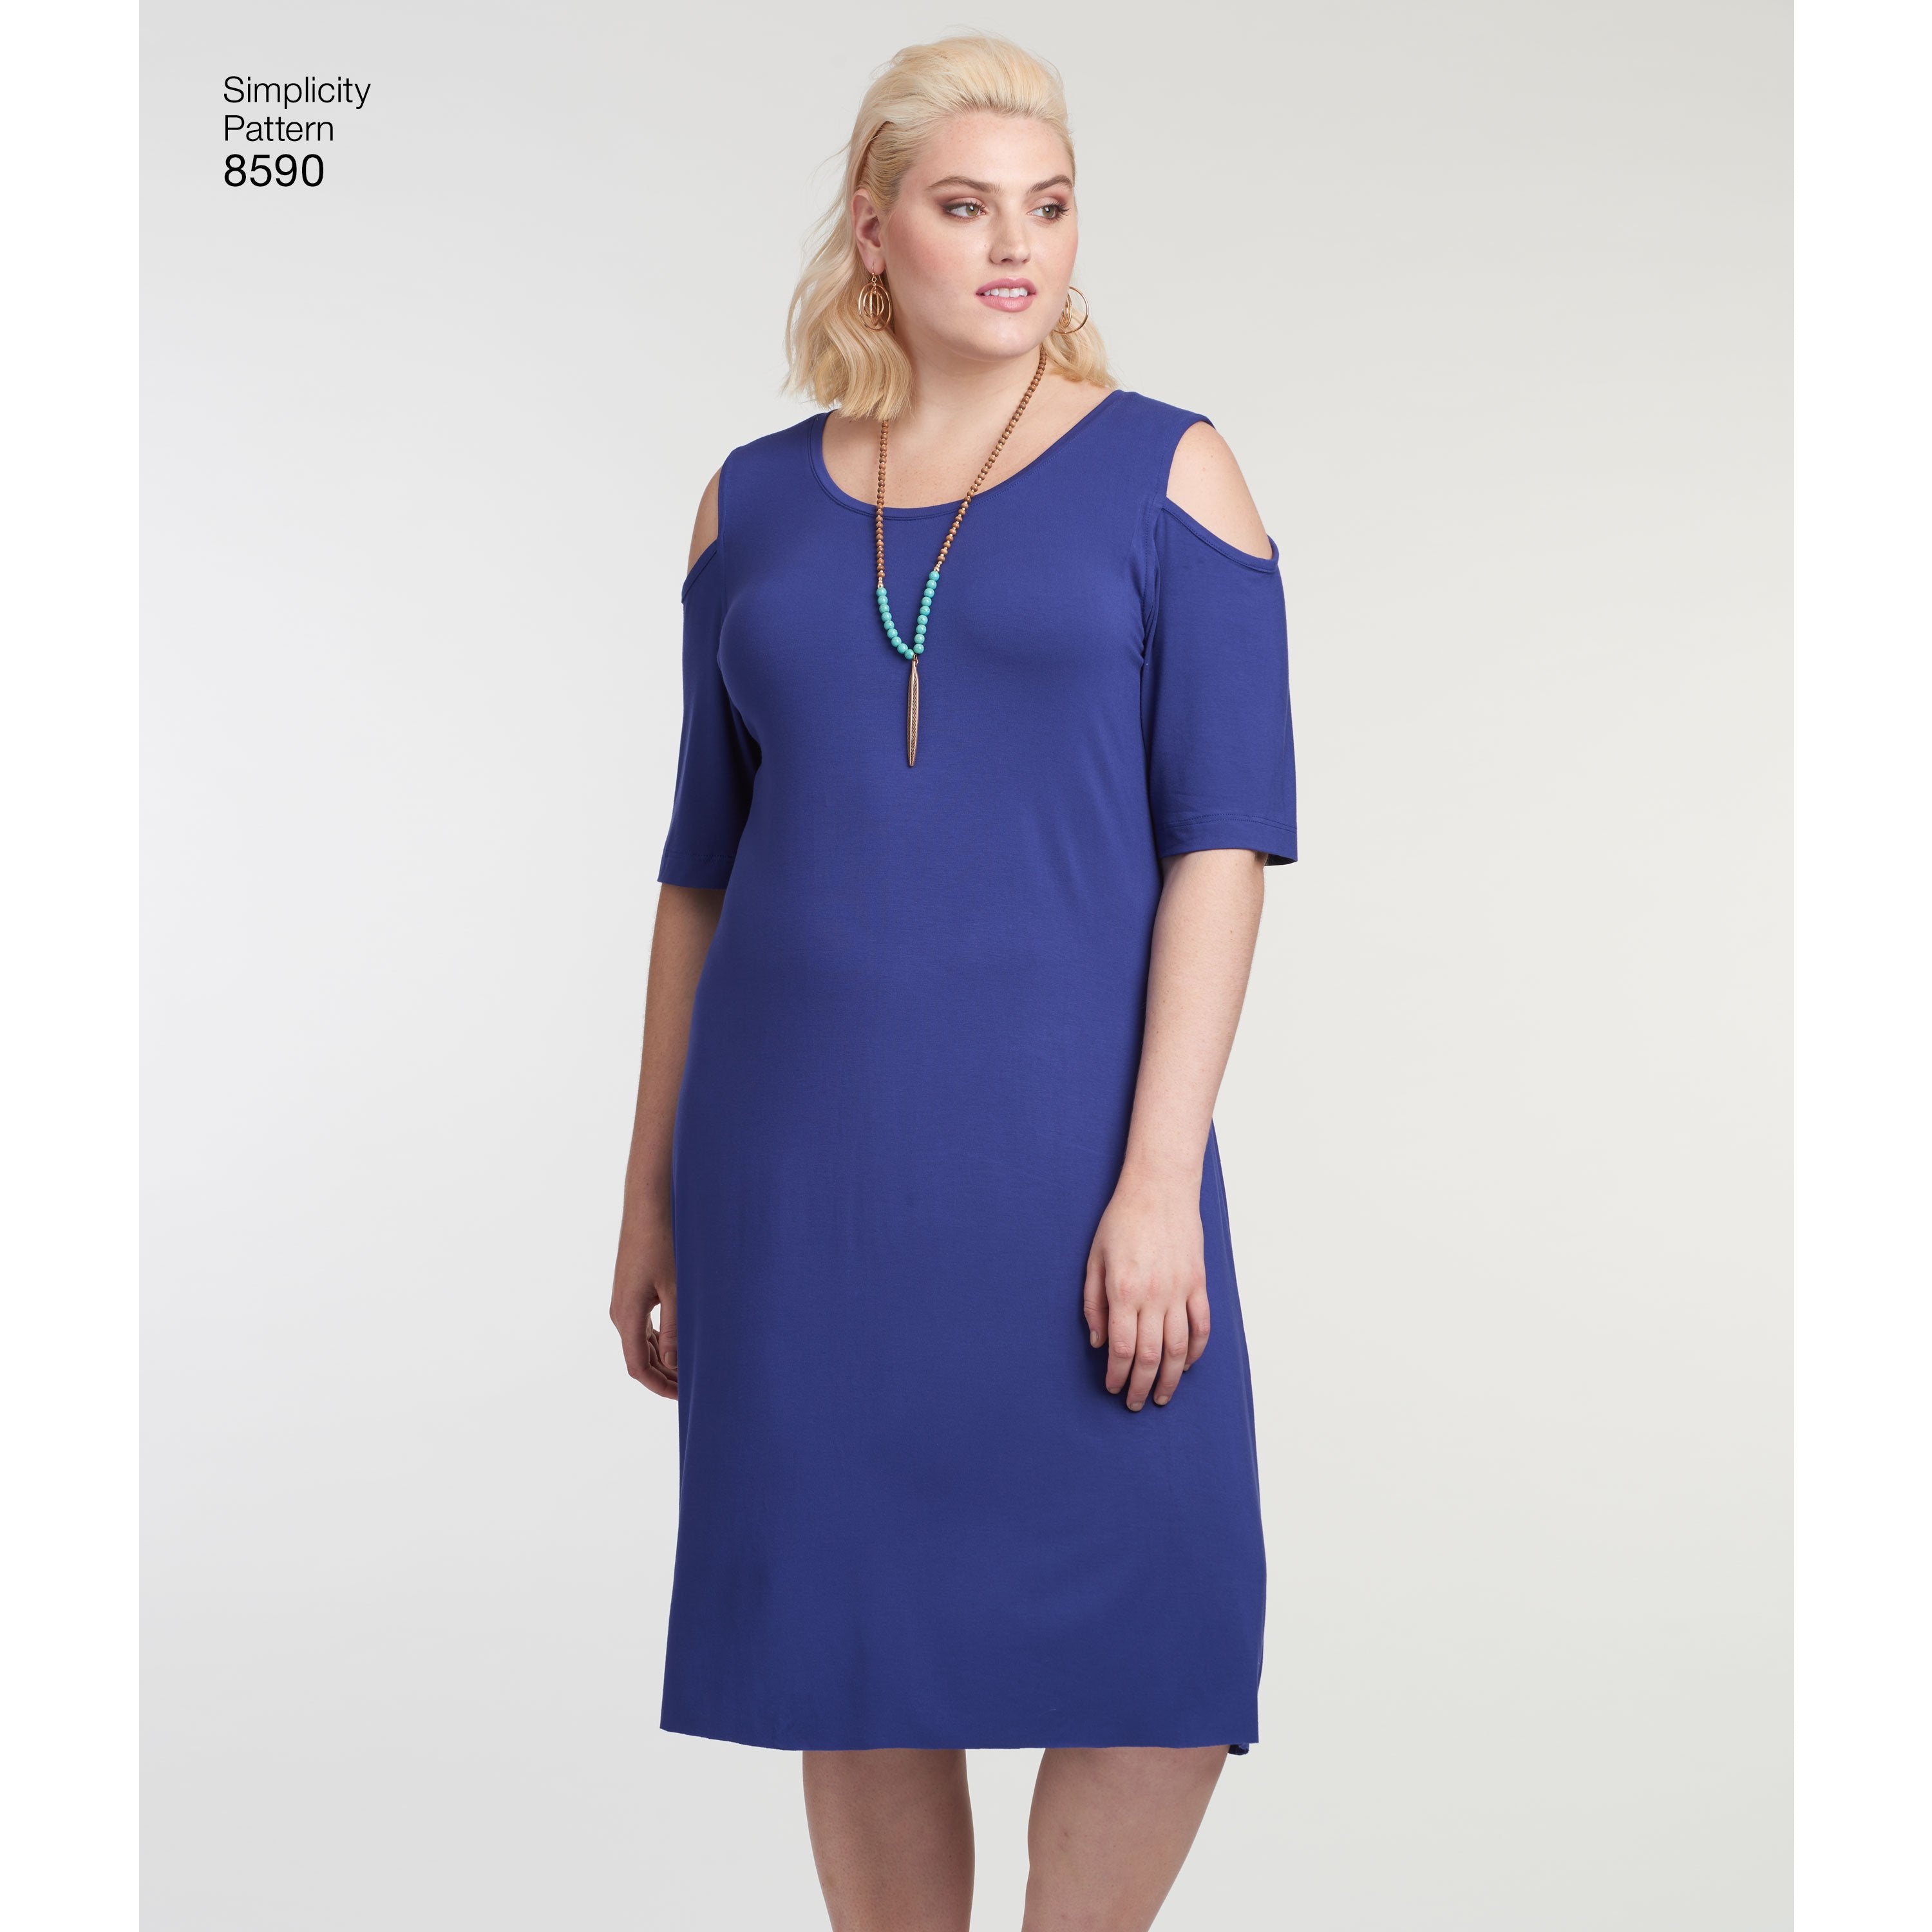 Simplicity Pattern 8590 knit dresses — jaycotts.co.uk - Sewing Supplies